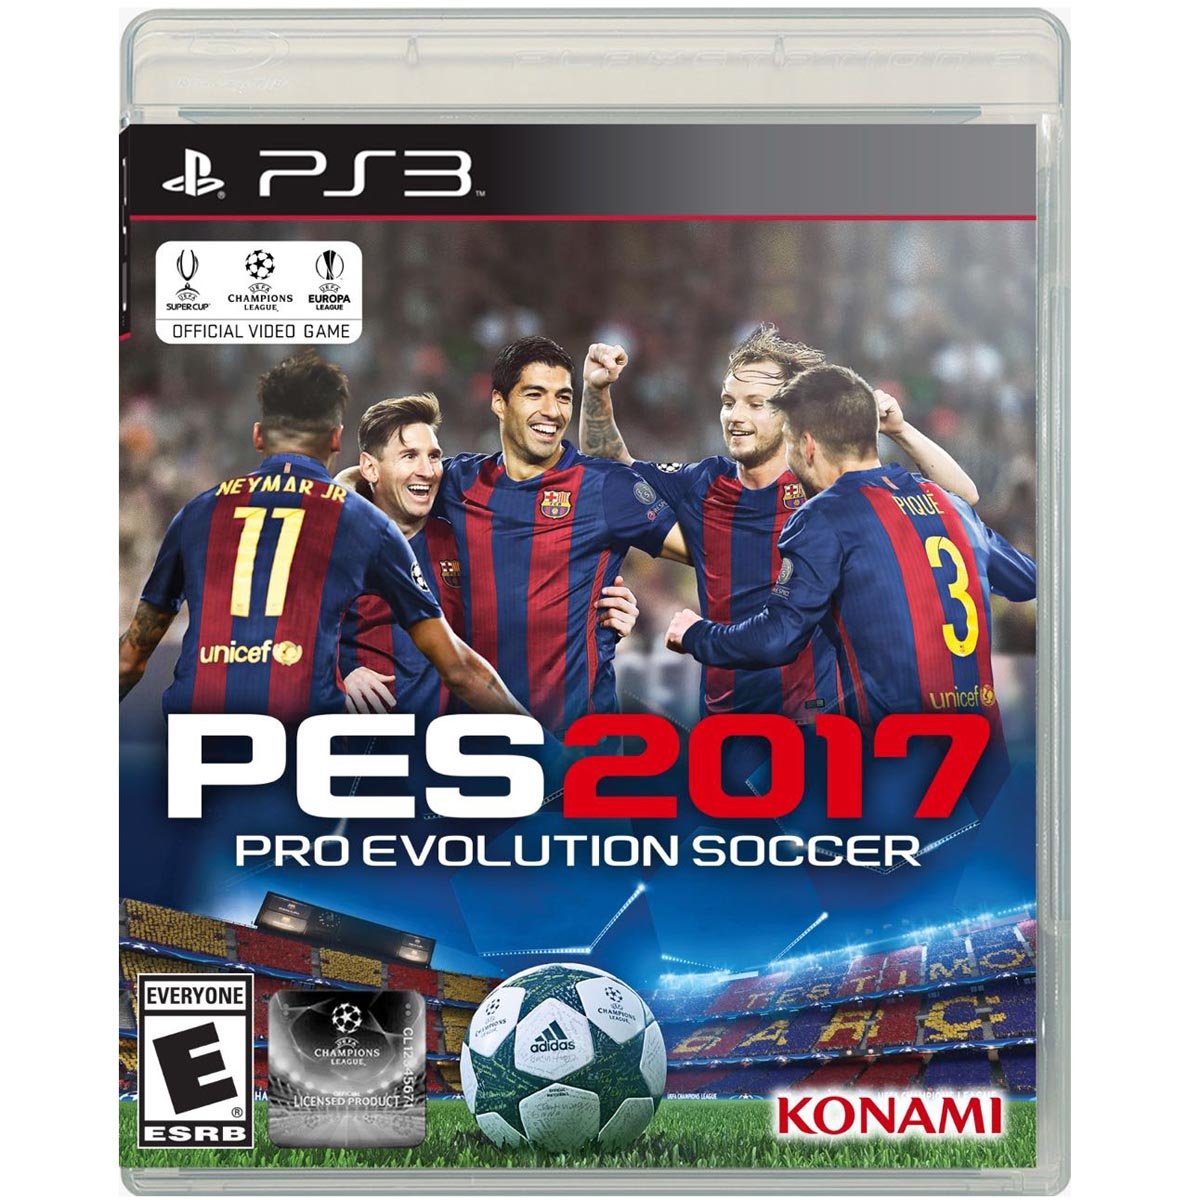 Ps3 Pro Evolution Soccer 2017